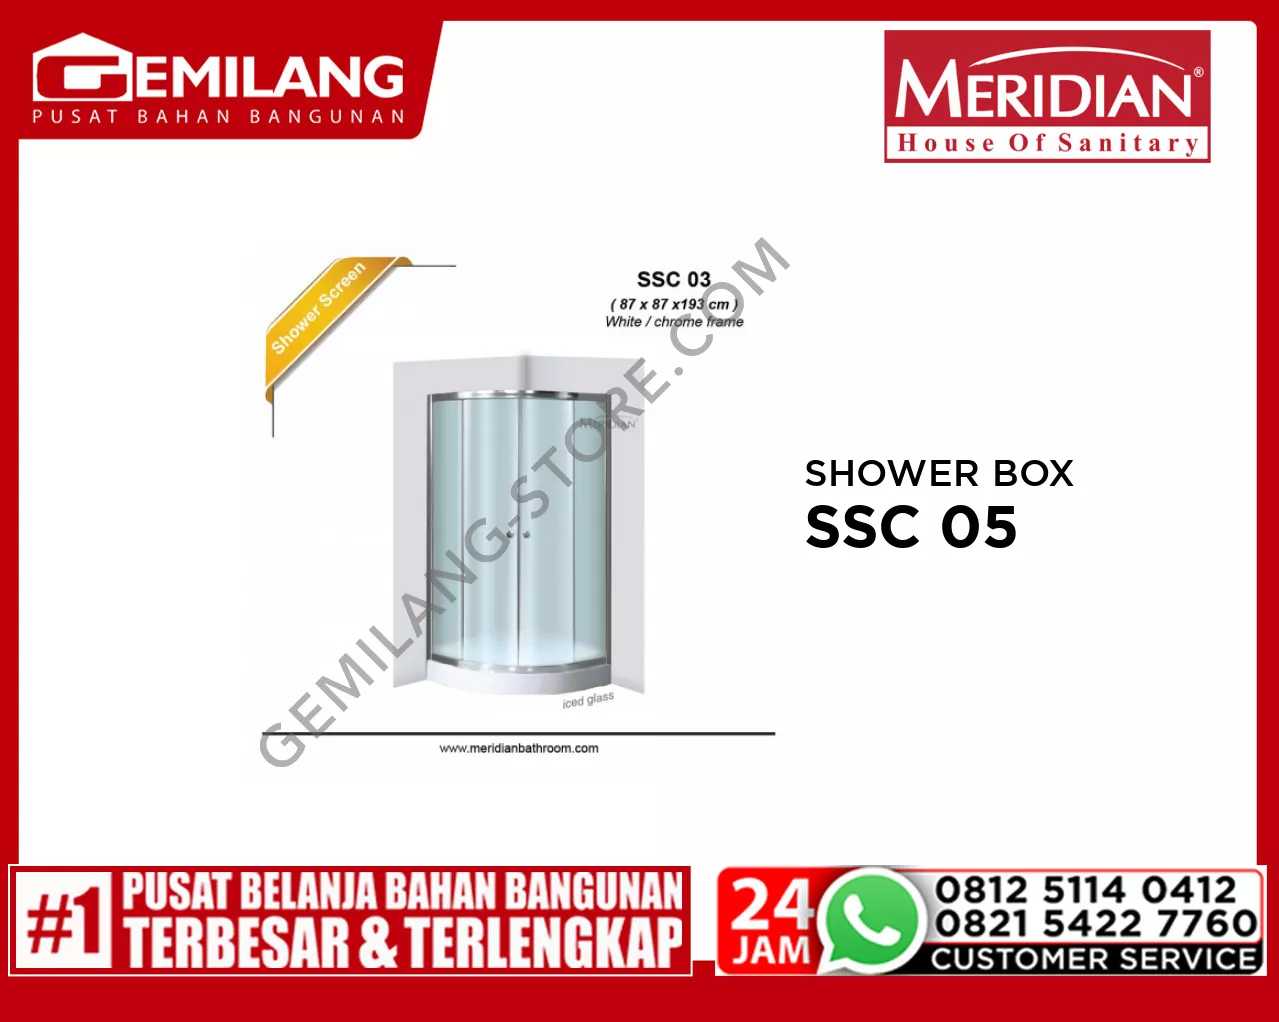 MERIDIAN SHOWER BOX SSC 03 CHROME + TRAY